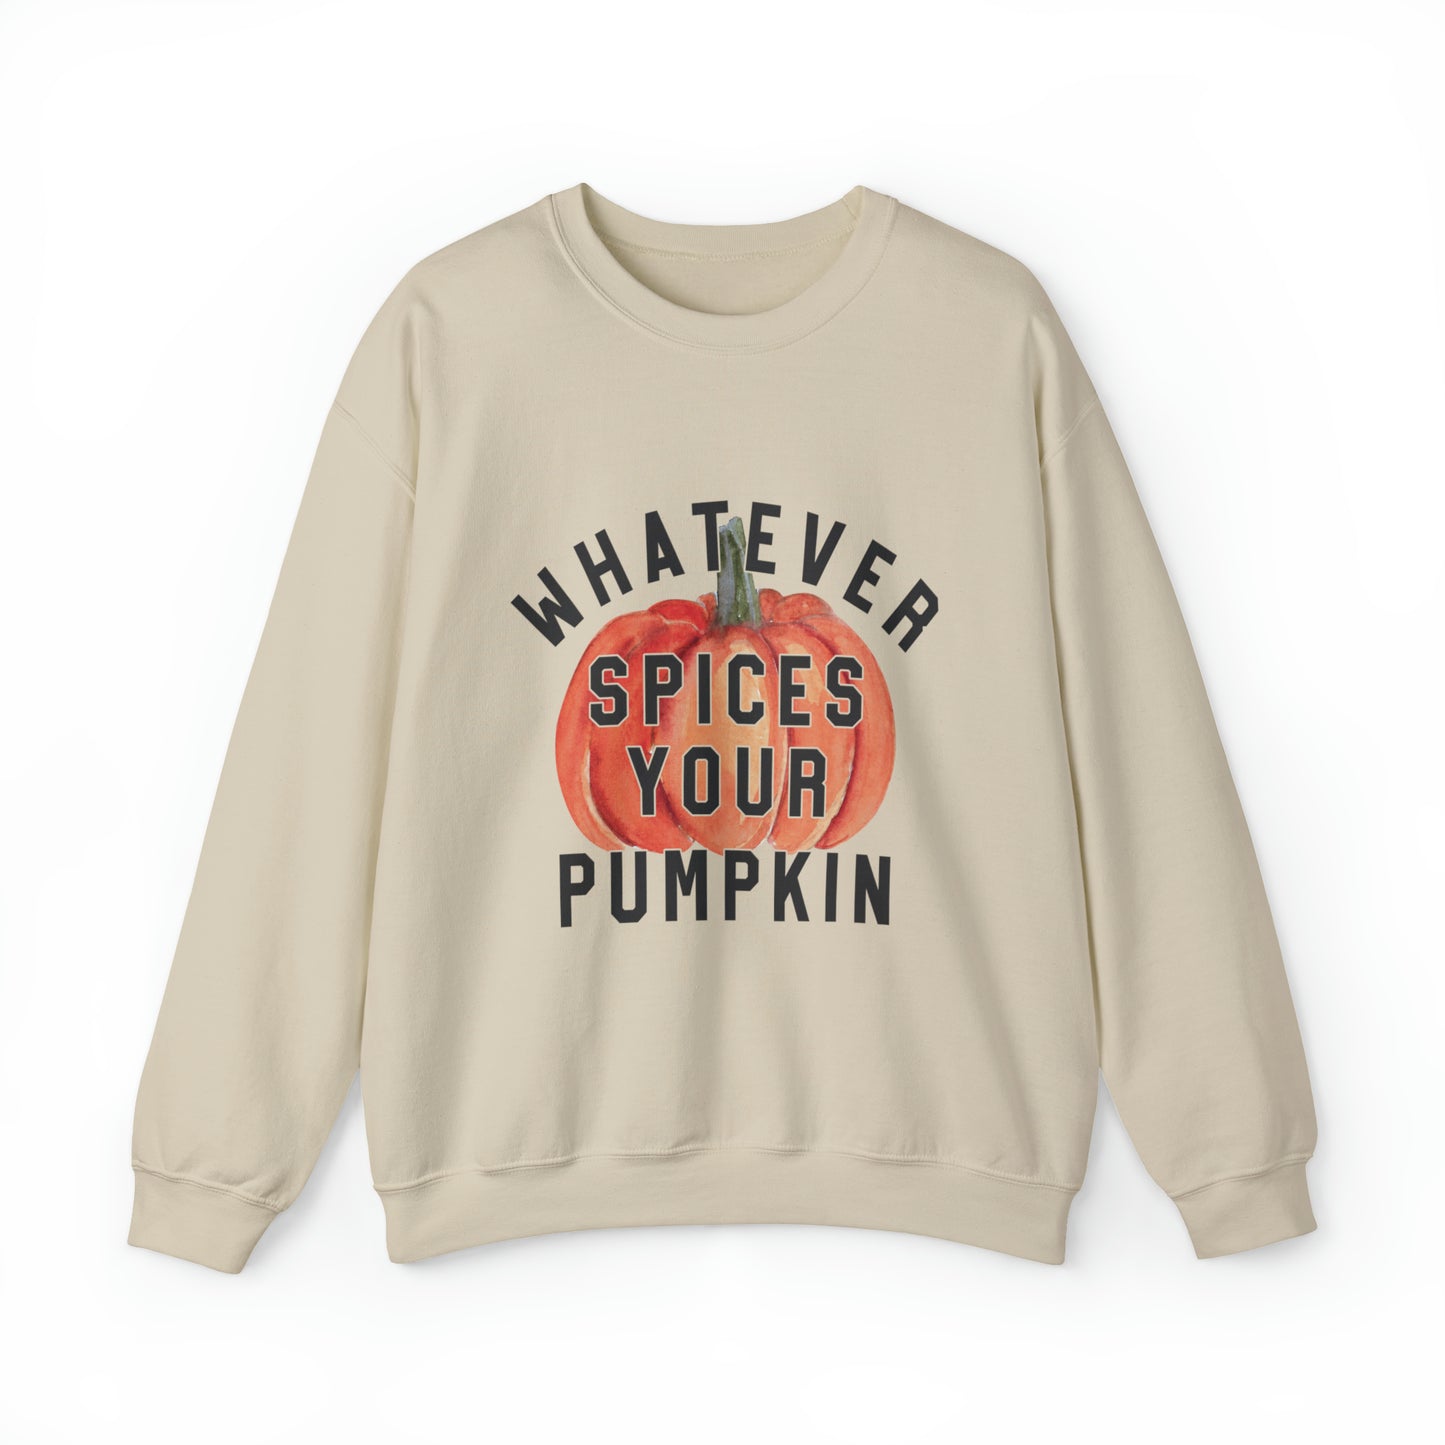 Whatever spices your pumpkin Crewneck Sweatshirt